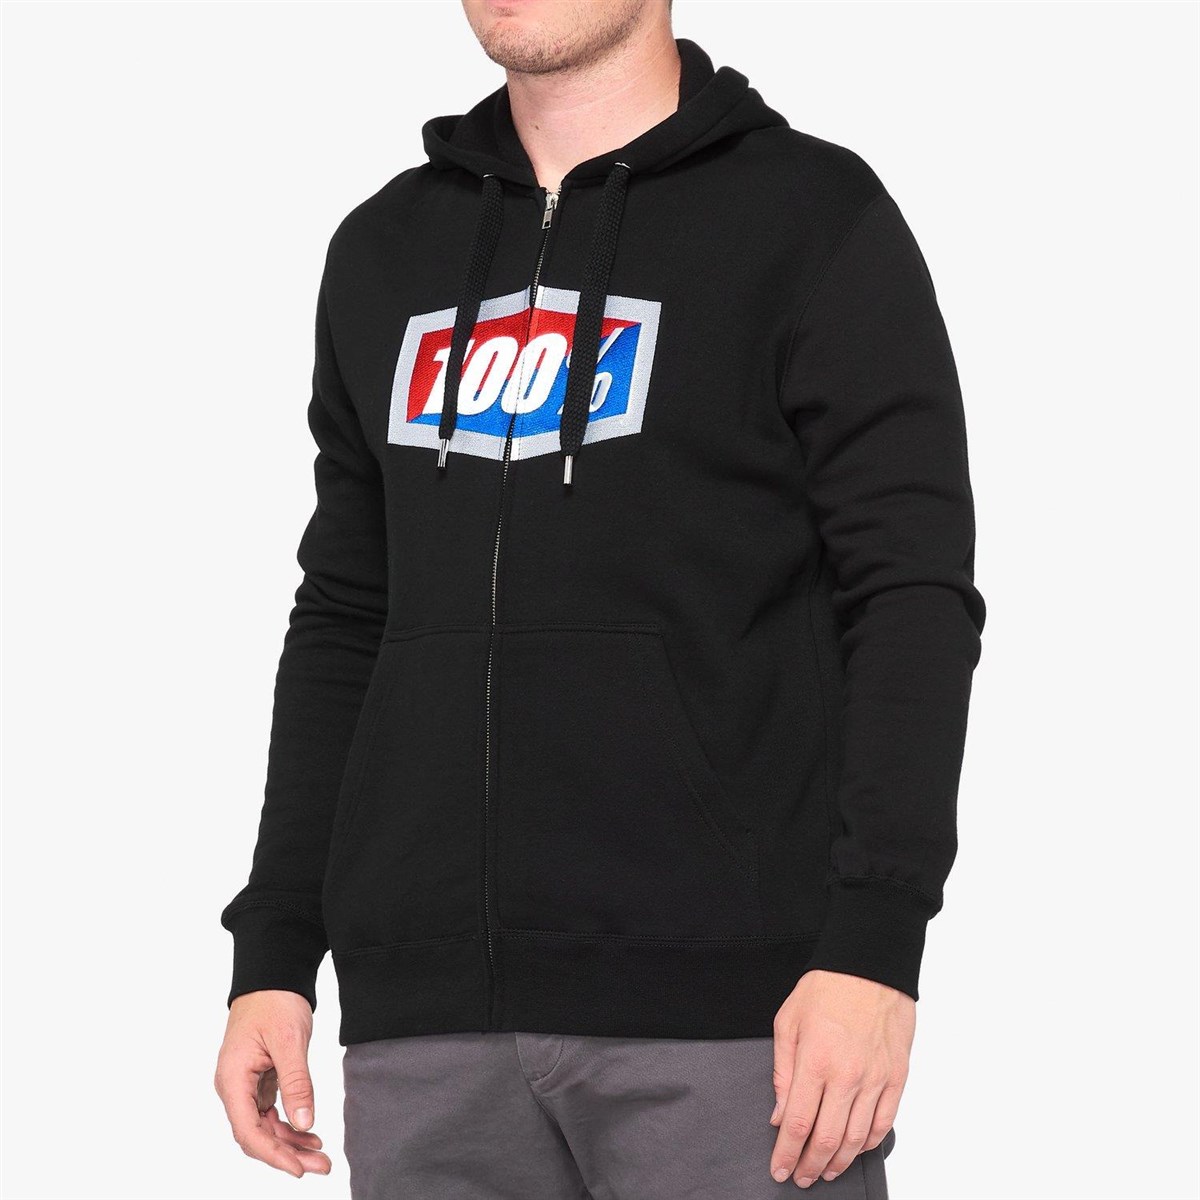 100% Official Zip Hooded Sweatshirt product image